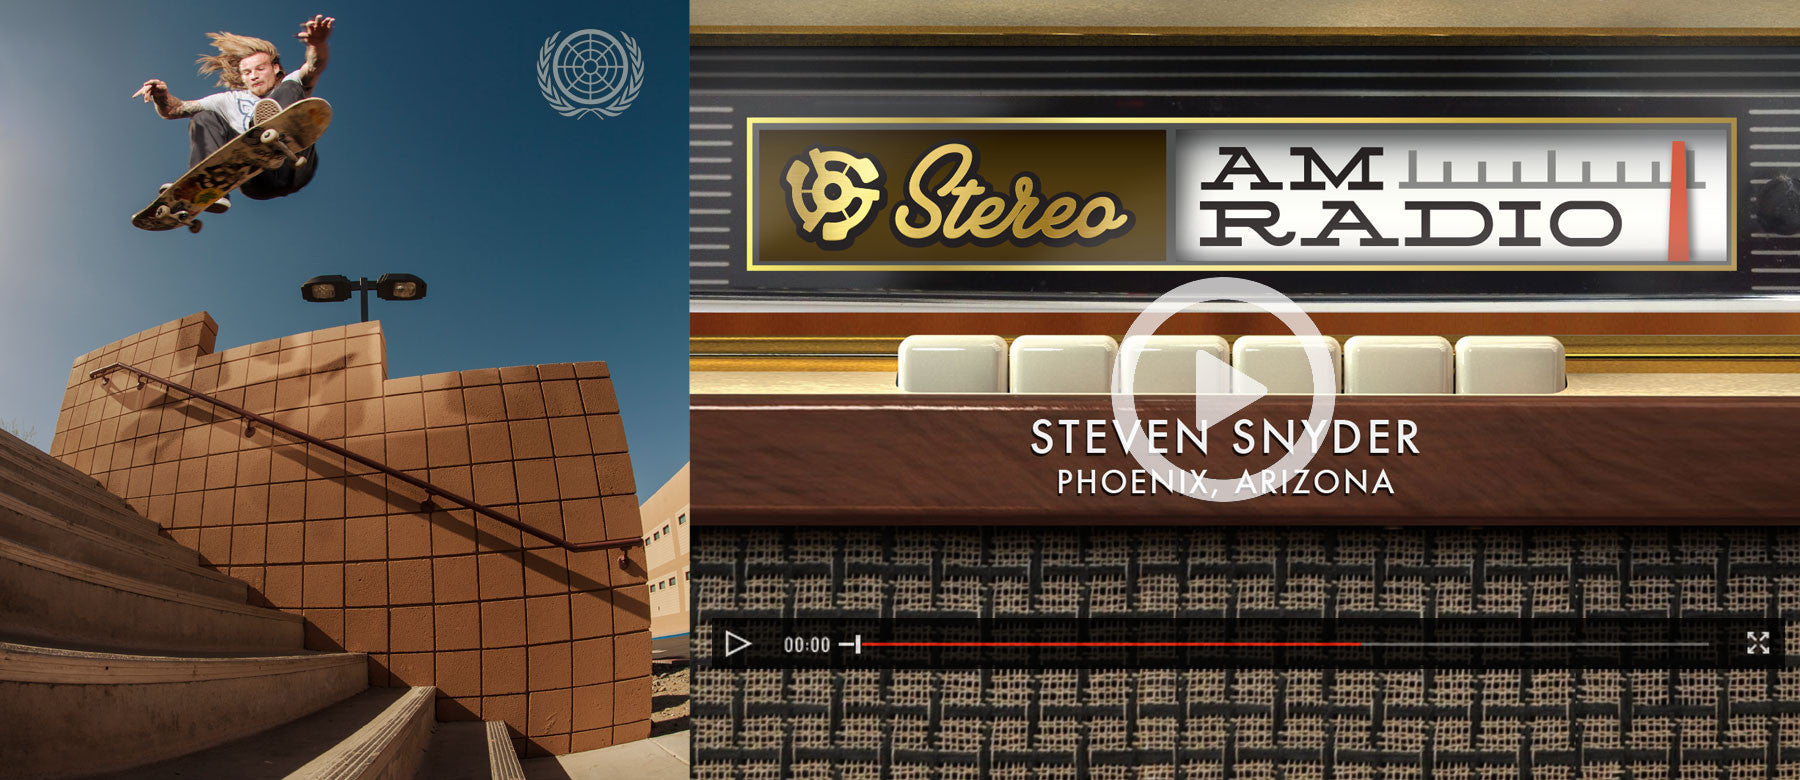 Stereo - AM Radio Steven Snyder